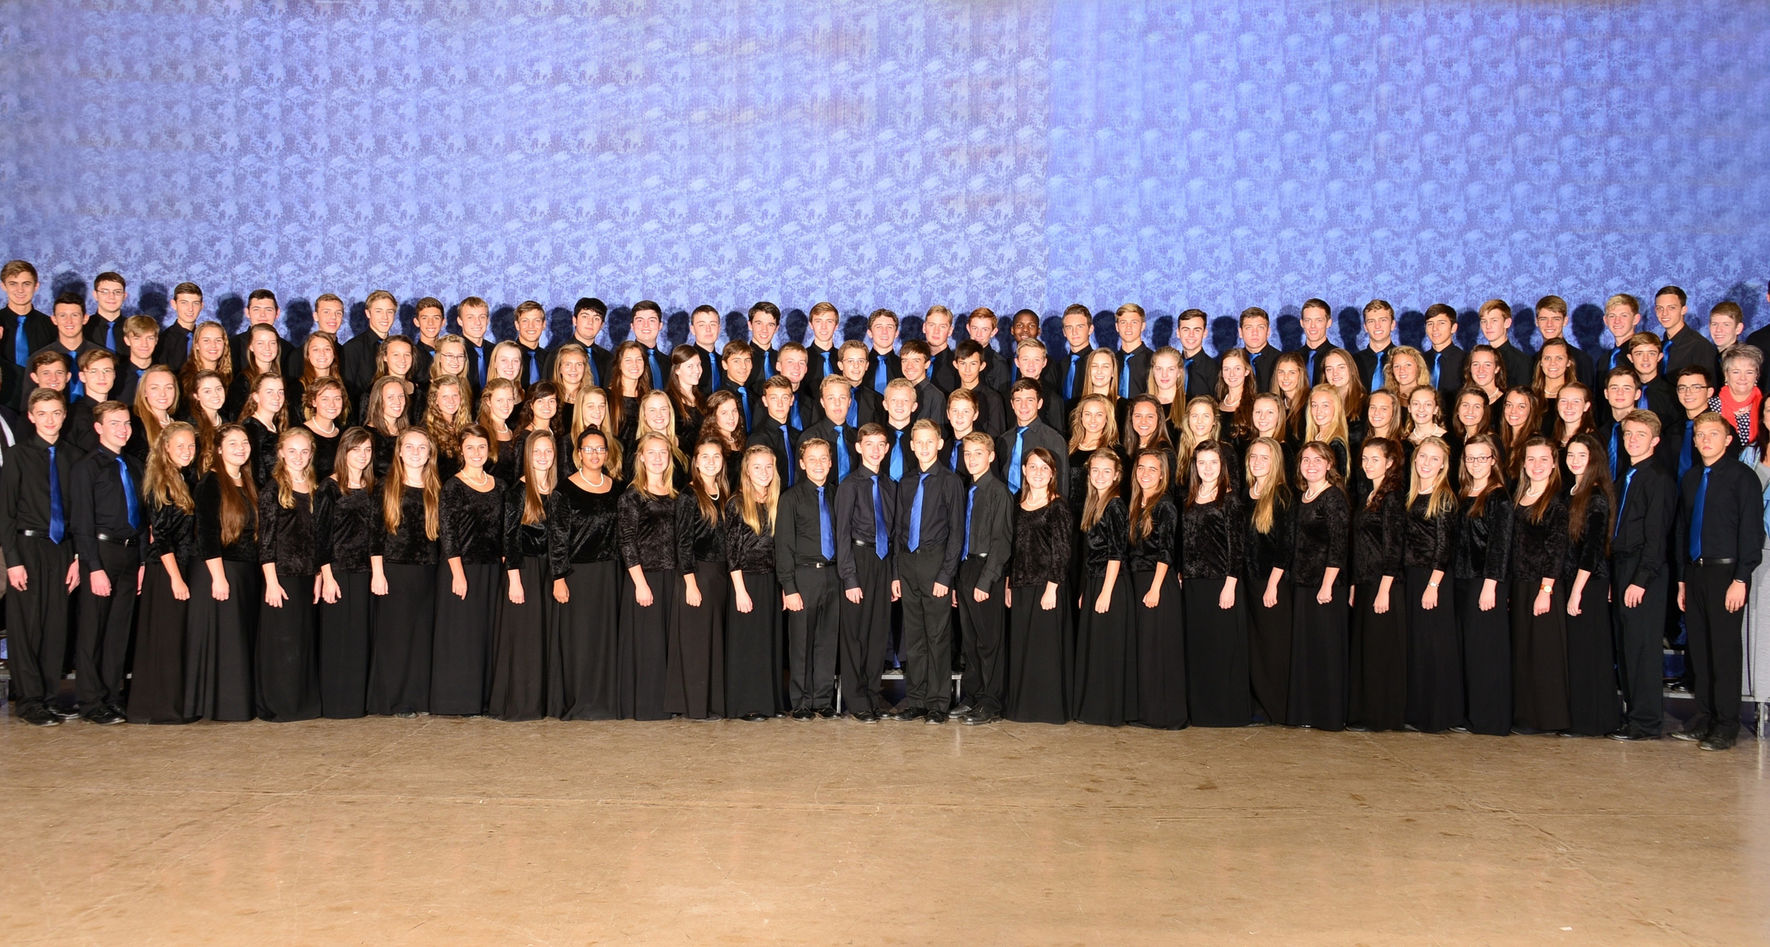 The Choir of the Menlopark High School